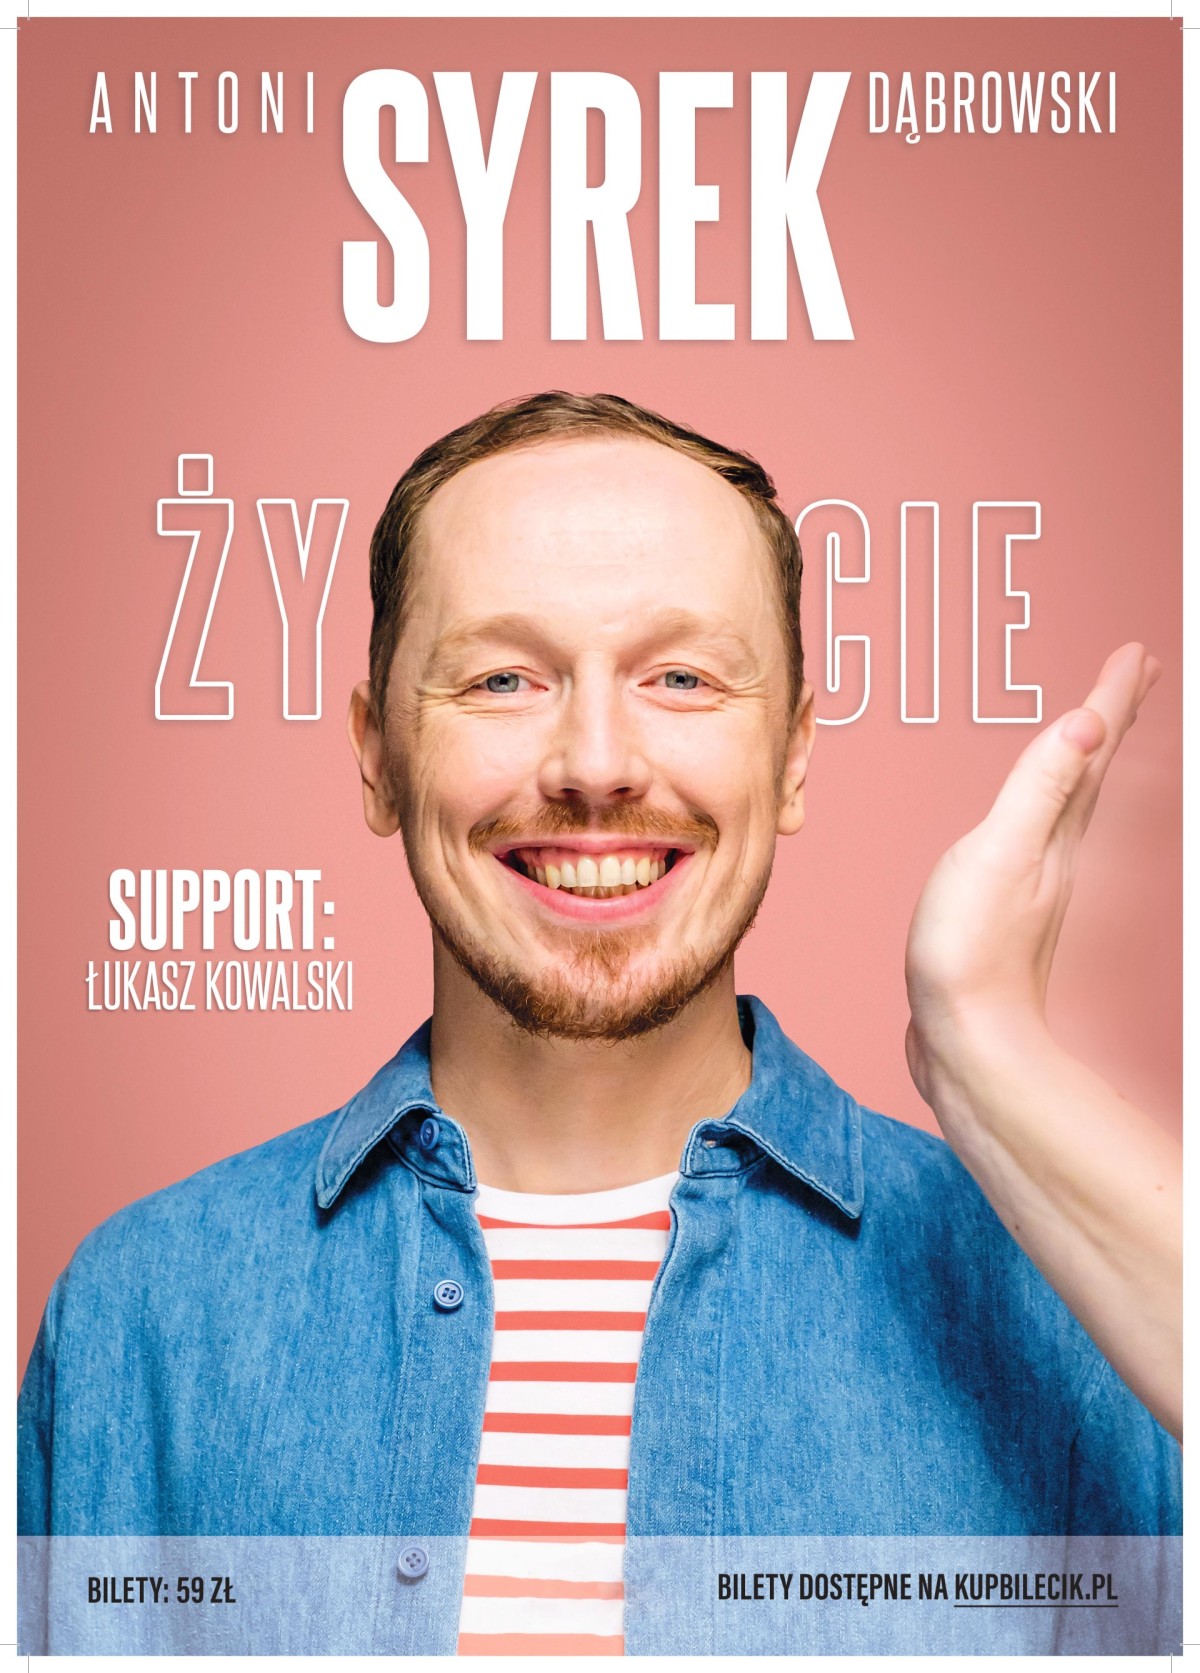 Stand-up: Antoni Syrek-Dąbrowski